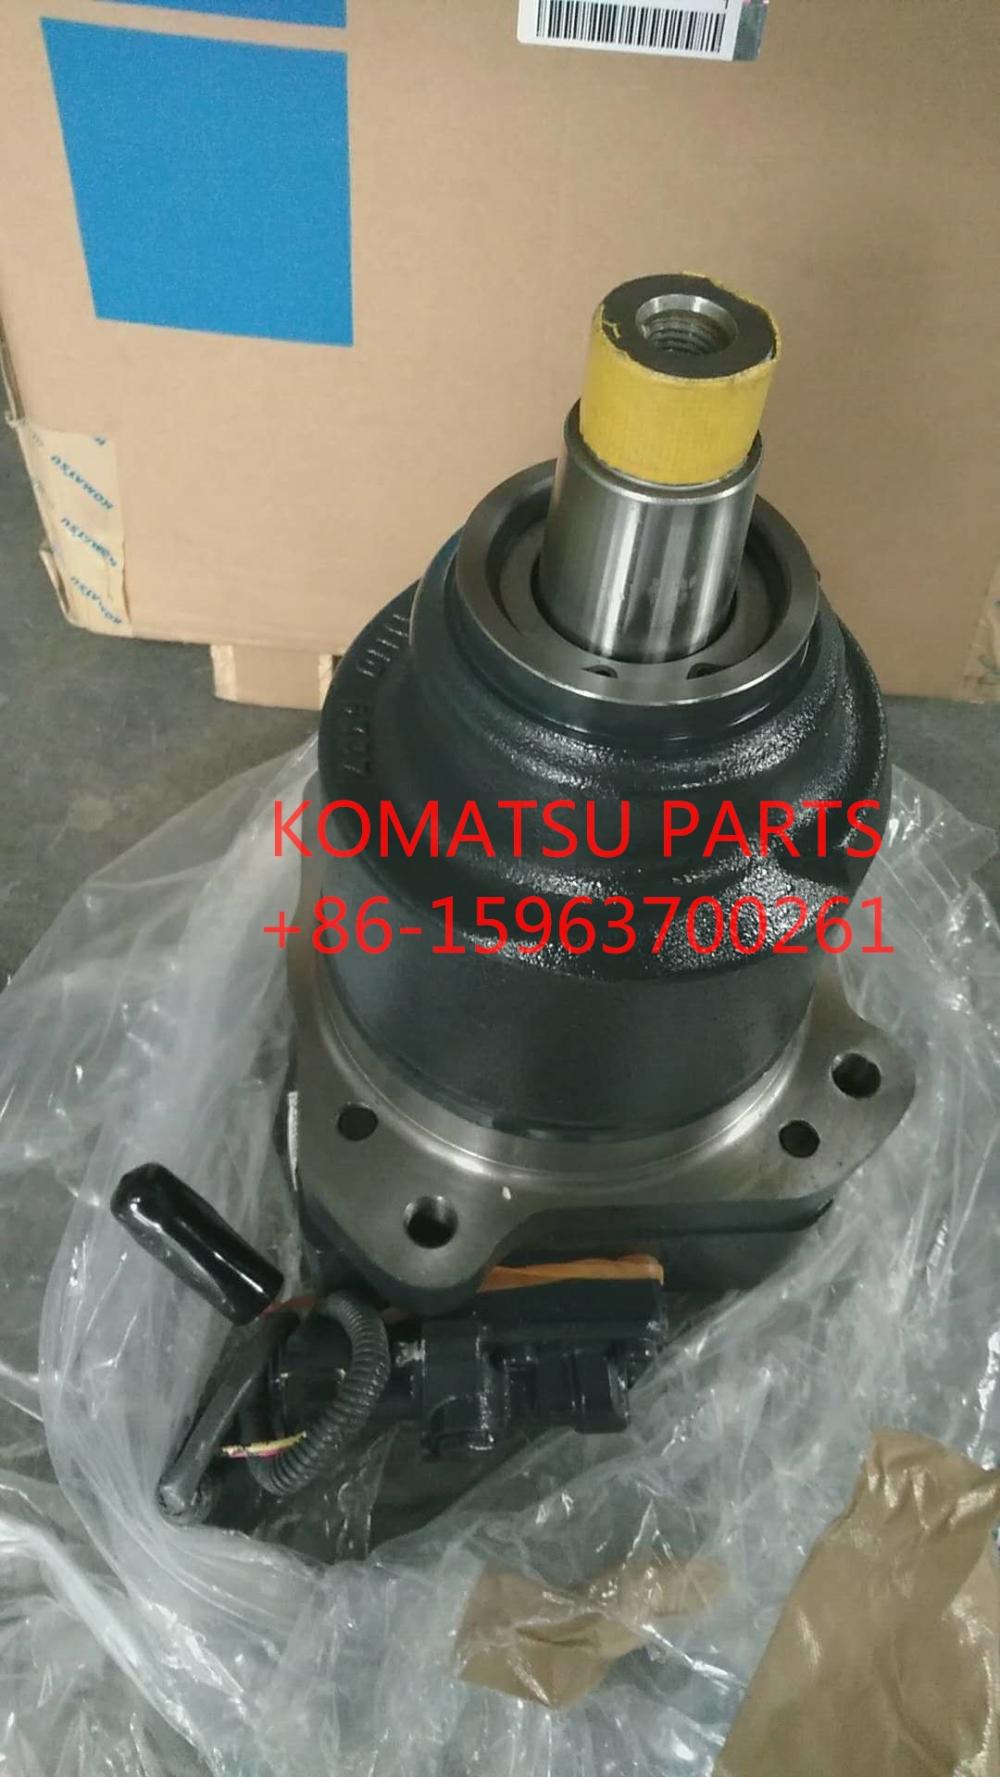 komatsu fan motor 708-7W-00120 for PC600-8 China Manufacturer